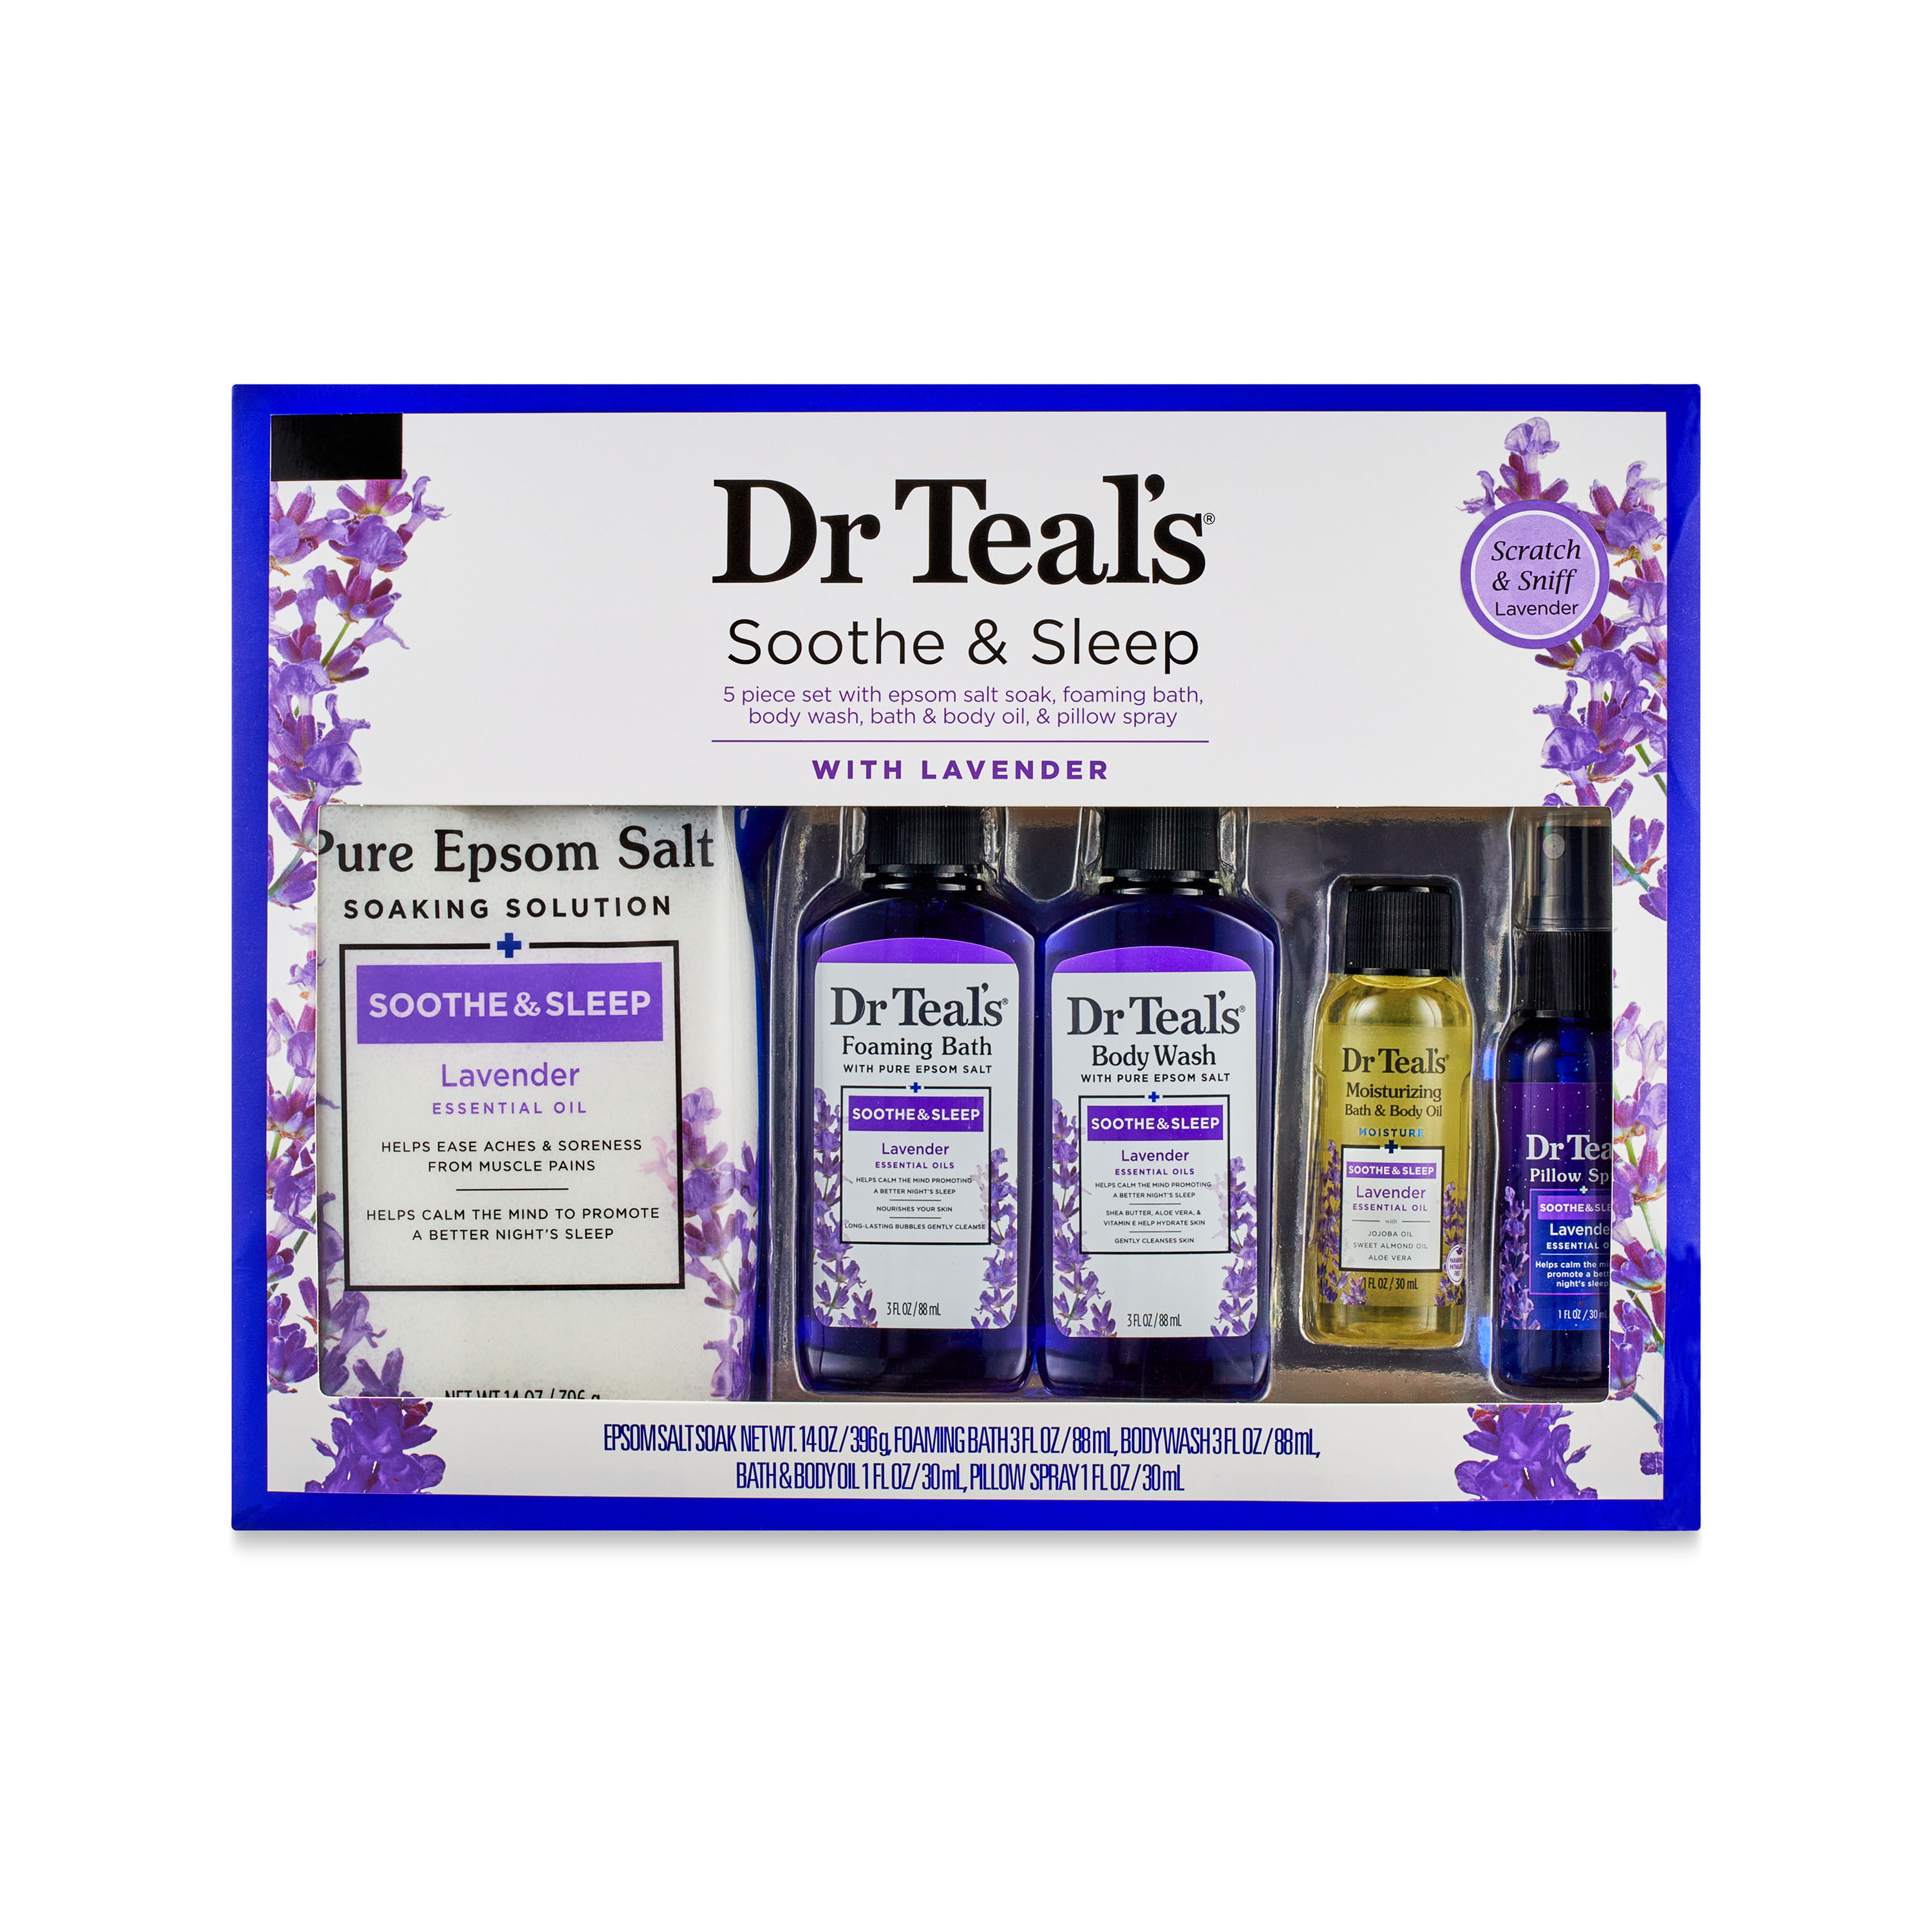 Dr Teal’s Soothe & Sleep Gift Set, Lavender, 5 Piece - image 1 of 5